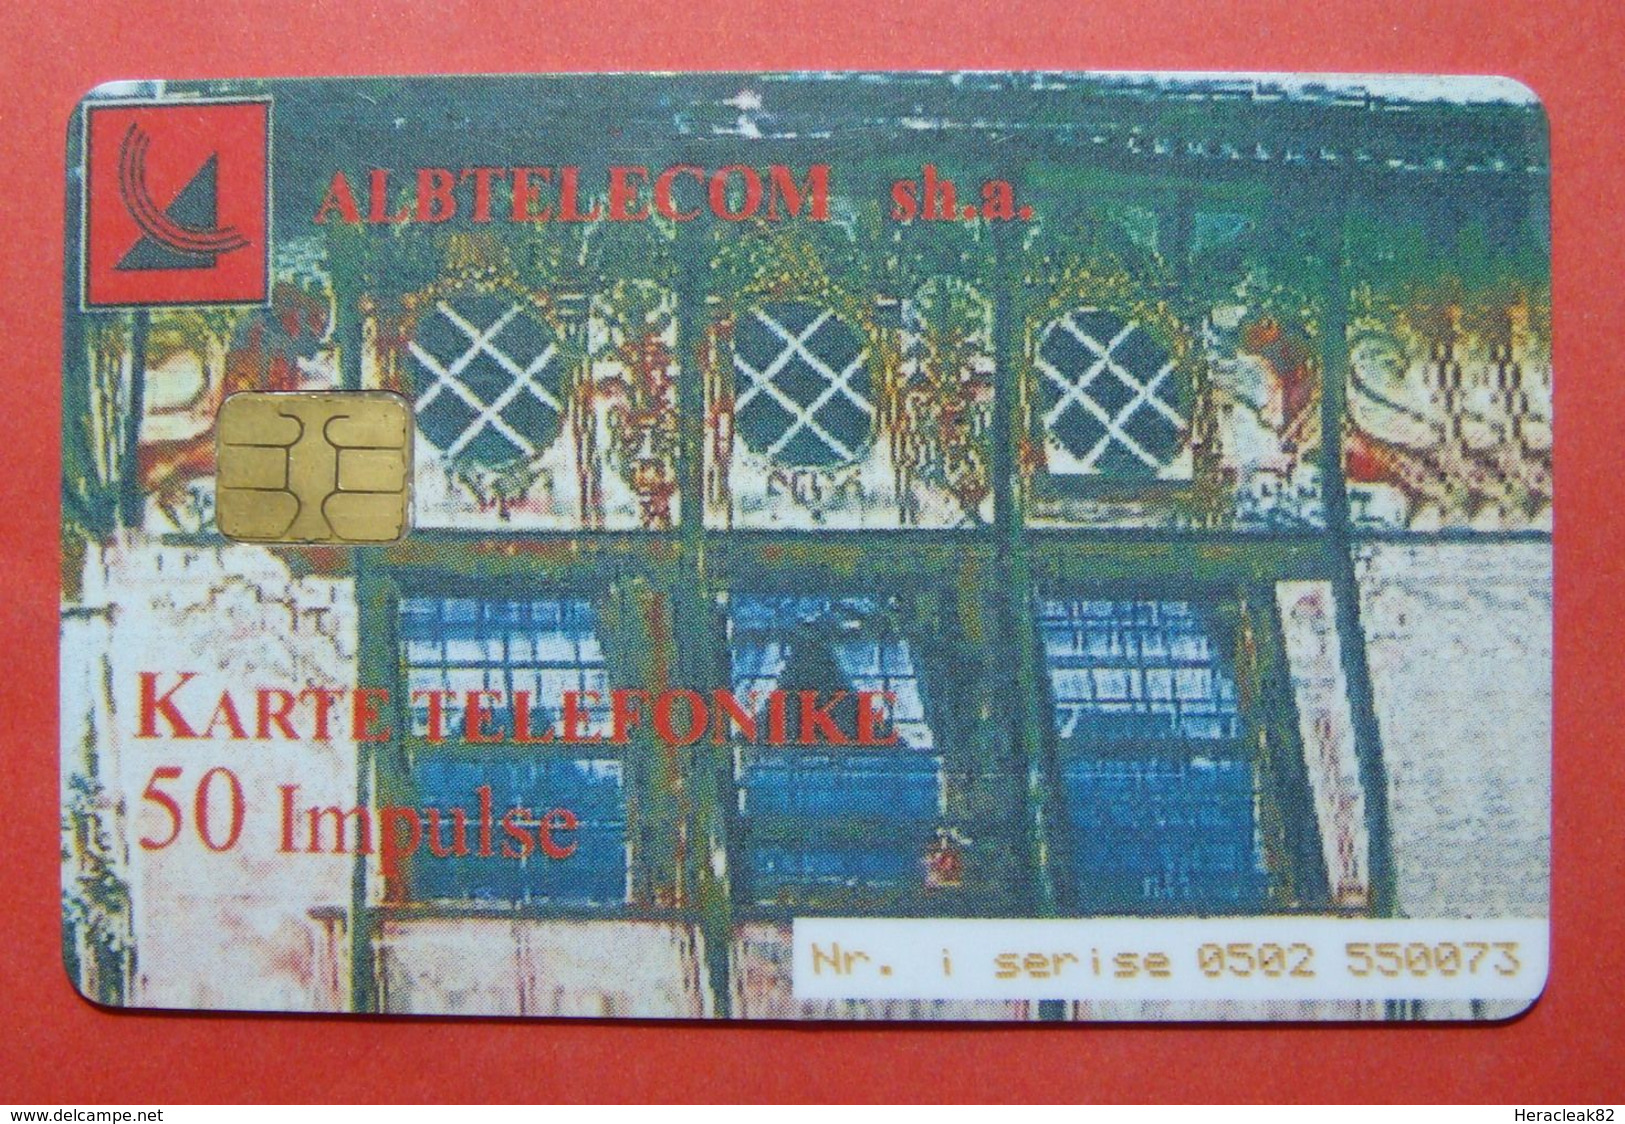 Albania Prepaid Card, Operator Albtelecom (50 Units) City Of Berat - Albania